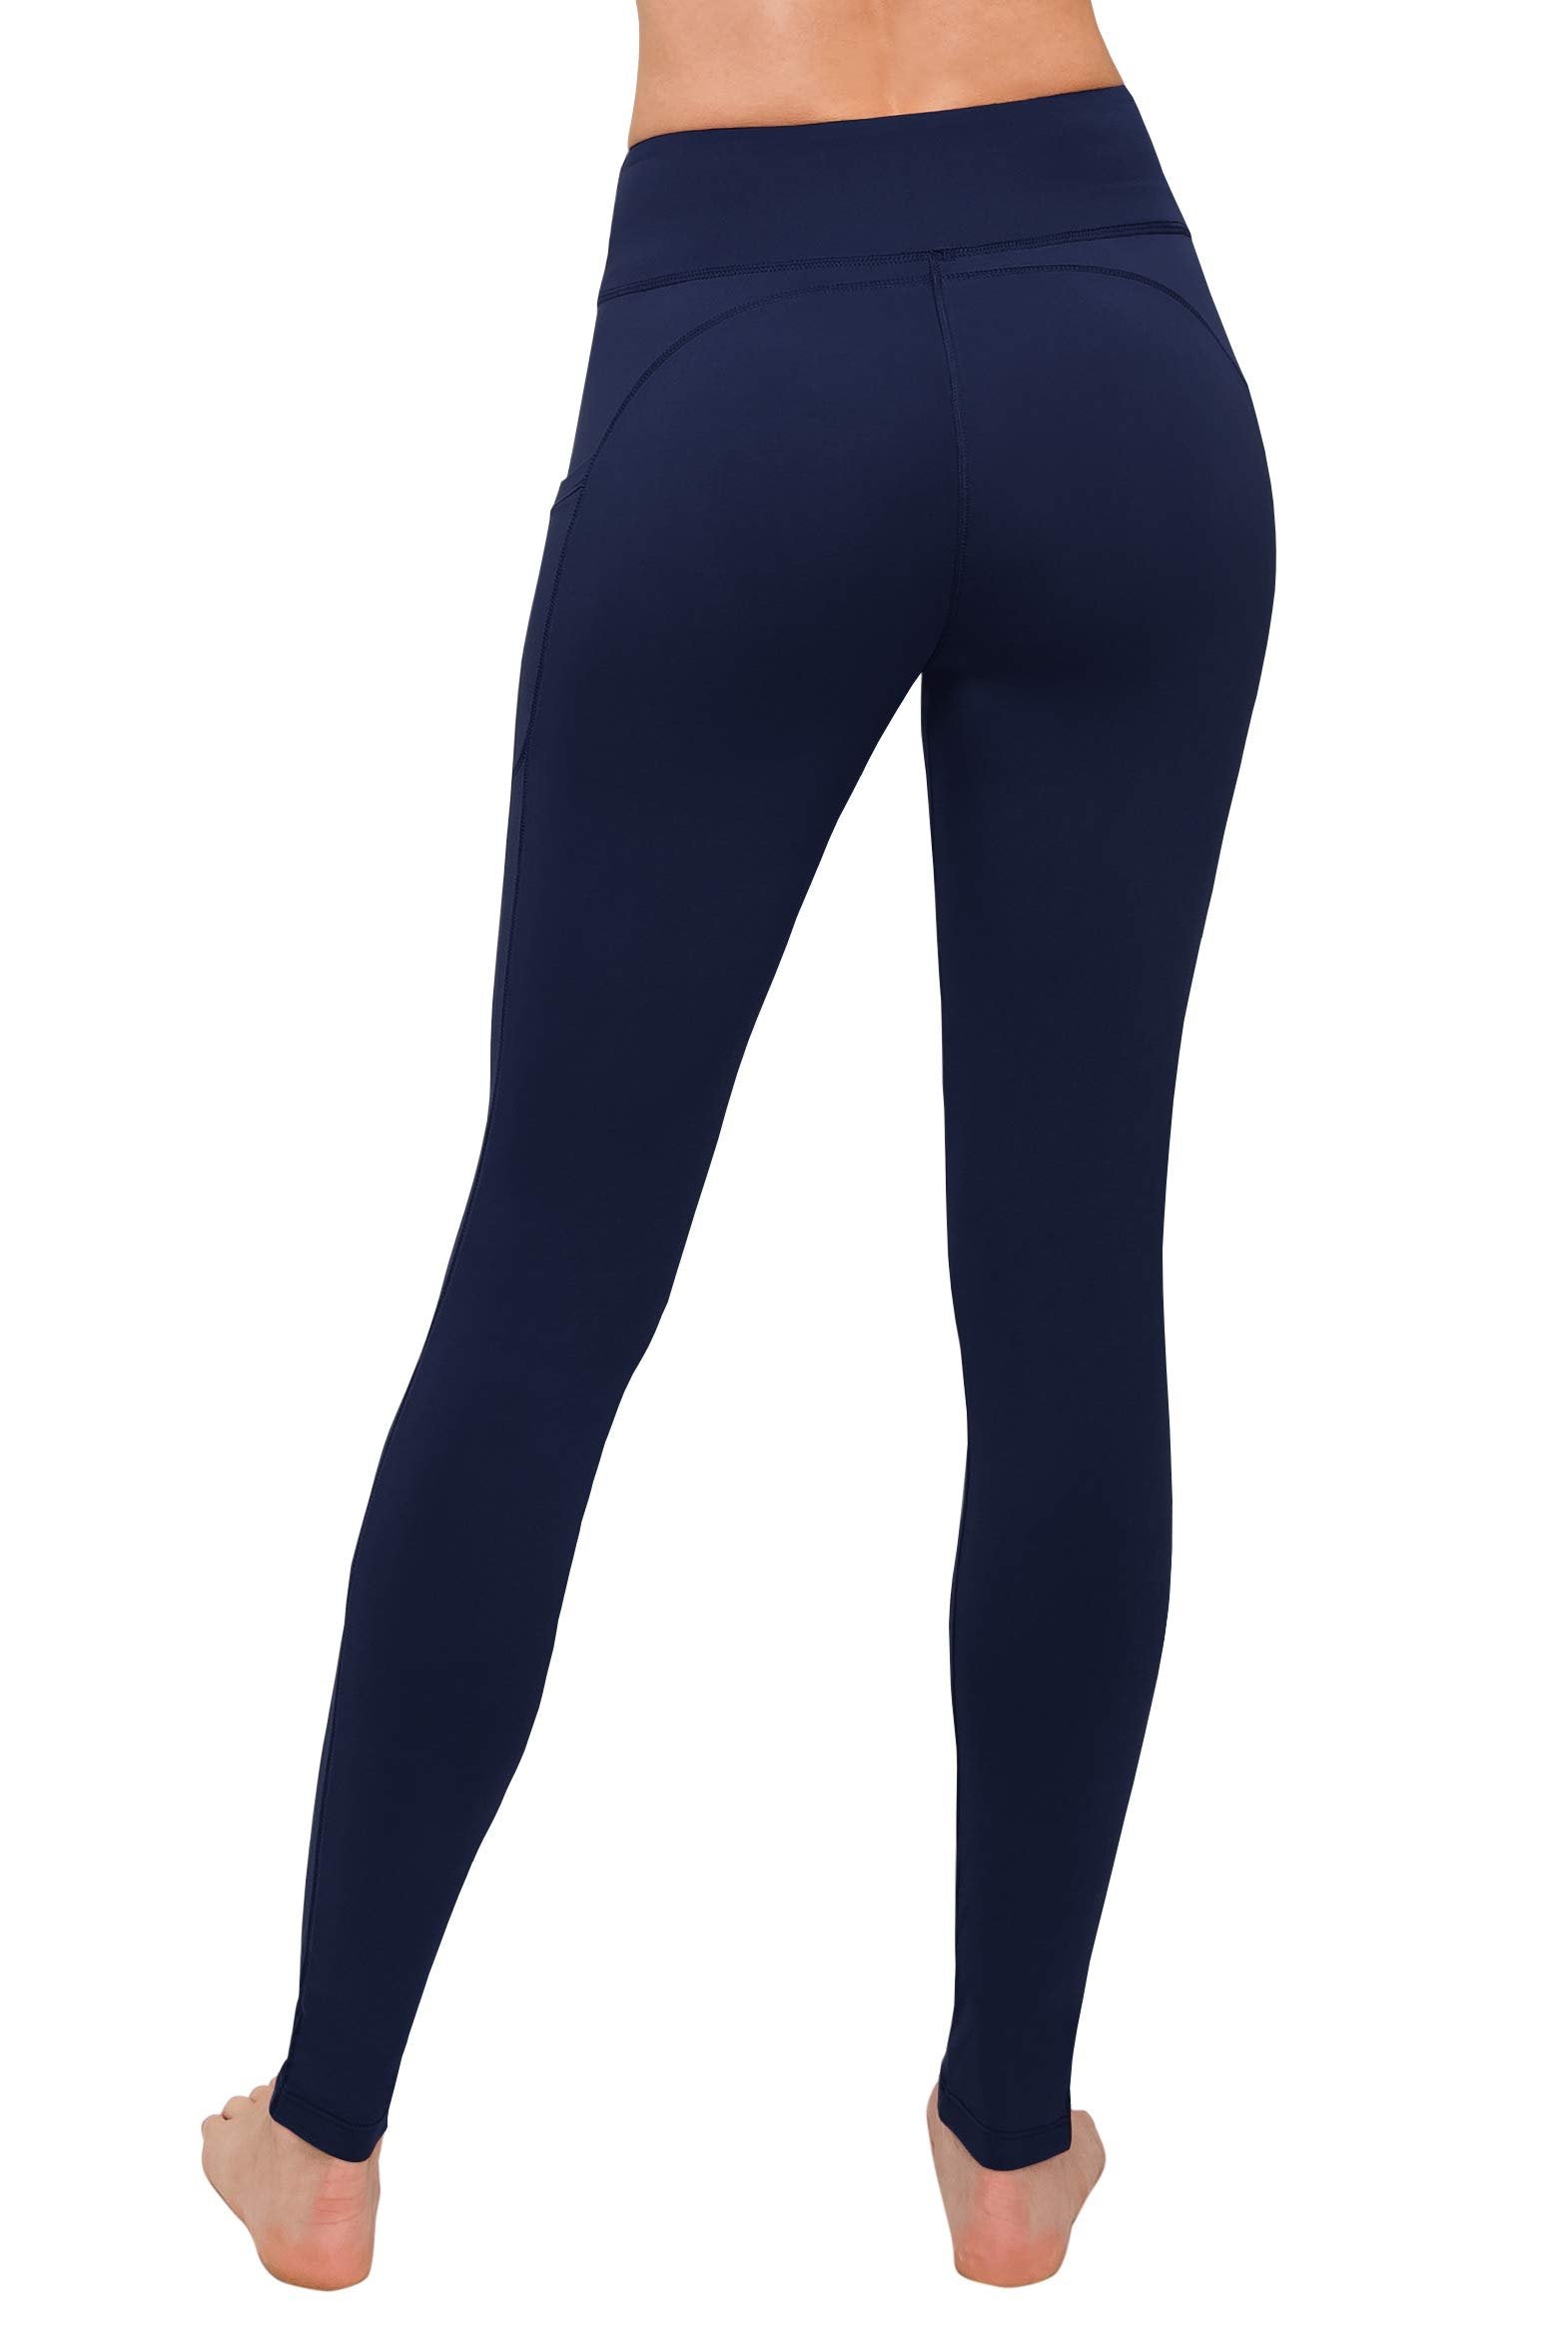 SATINA Navy Leggings Women High Waisted w/ Pockets | Plus Size 3 Waistband Yoga Workout Leggings